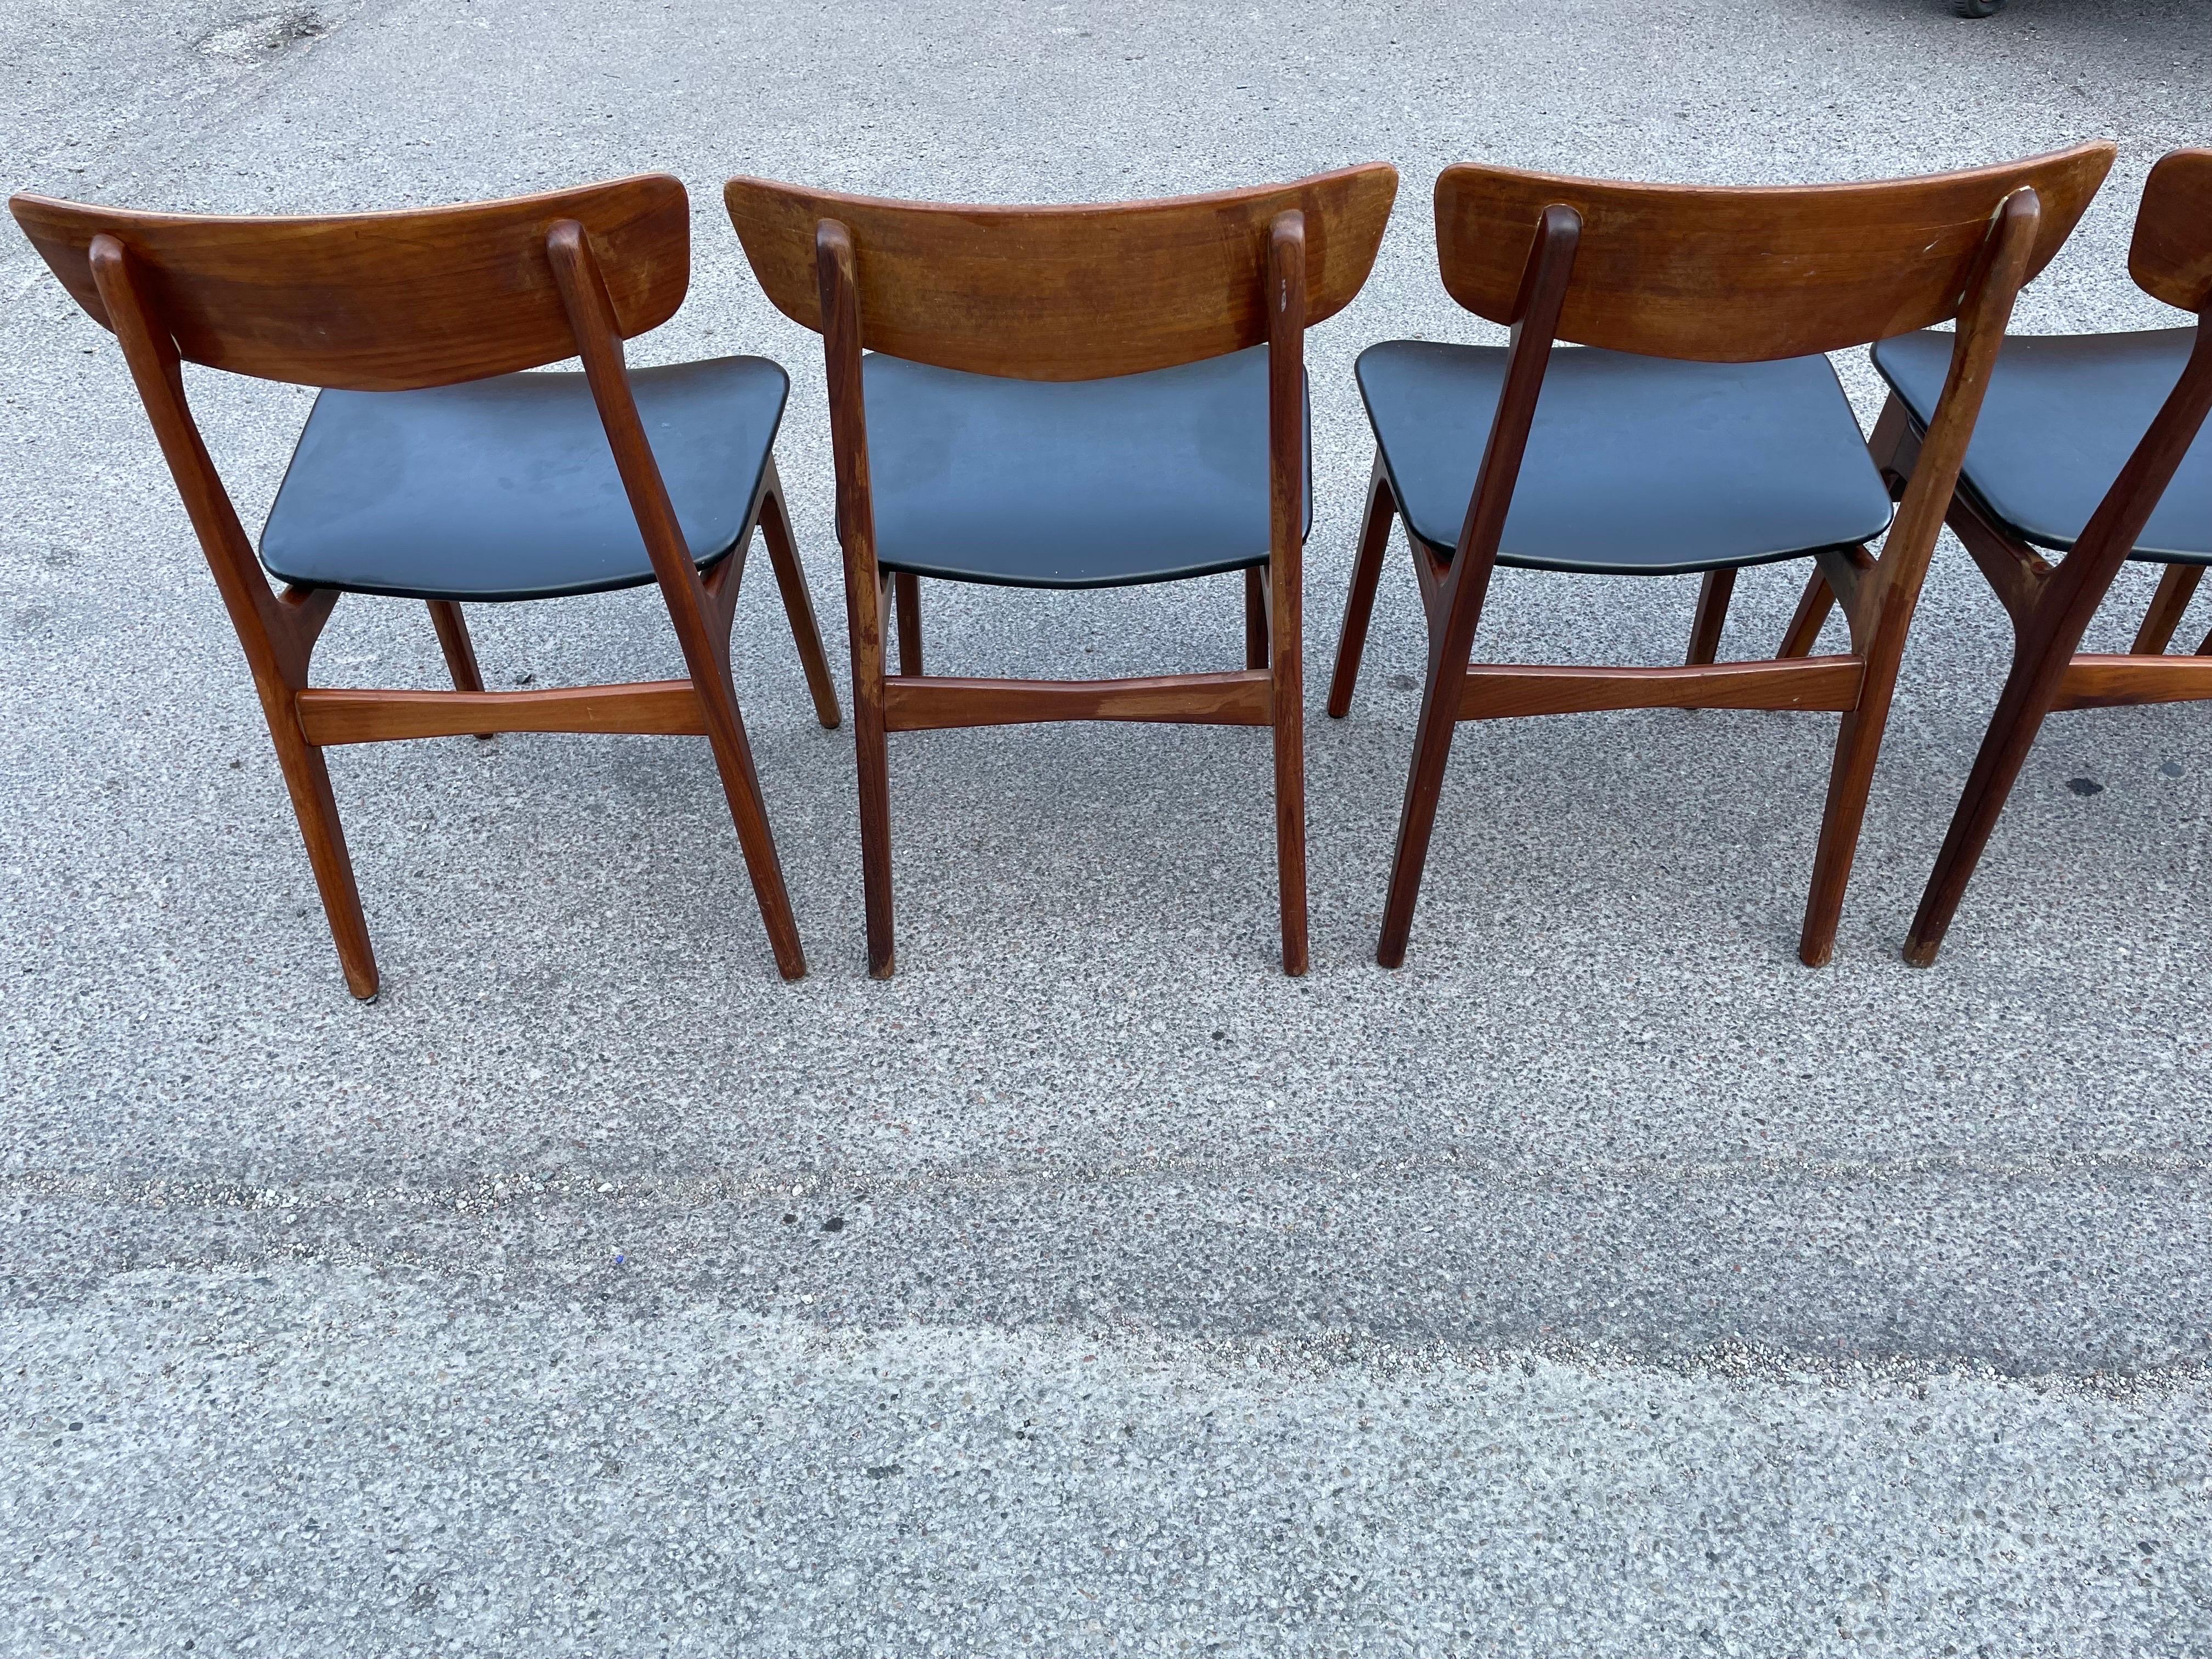 Mid-Century Modern Set of 6 Midcentury Danish Chairs in Teak by Schiønning & Elgaard, 1960s For Sale